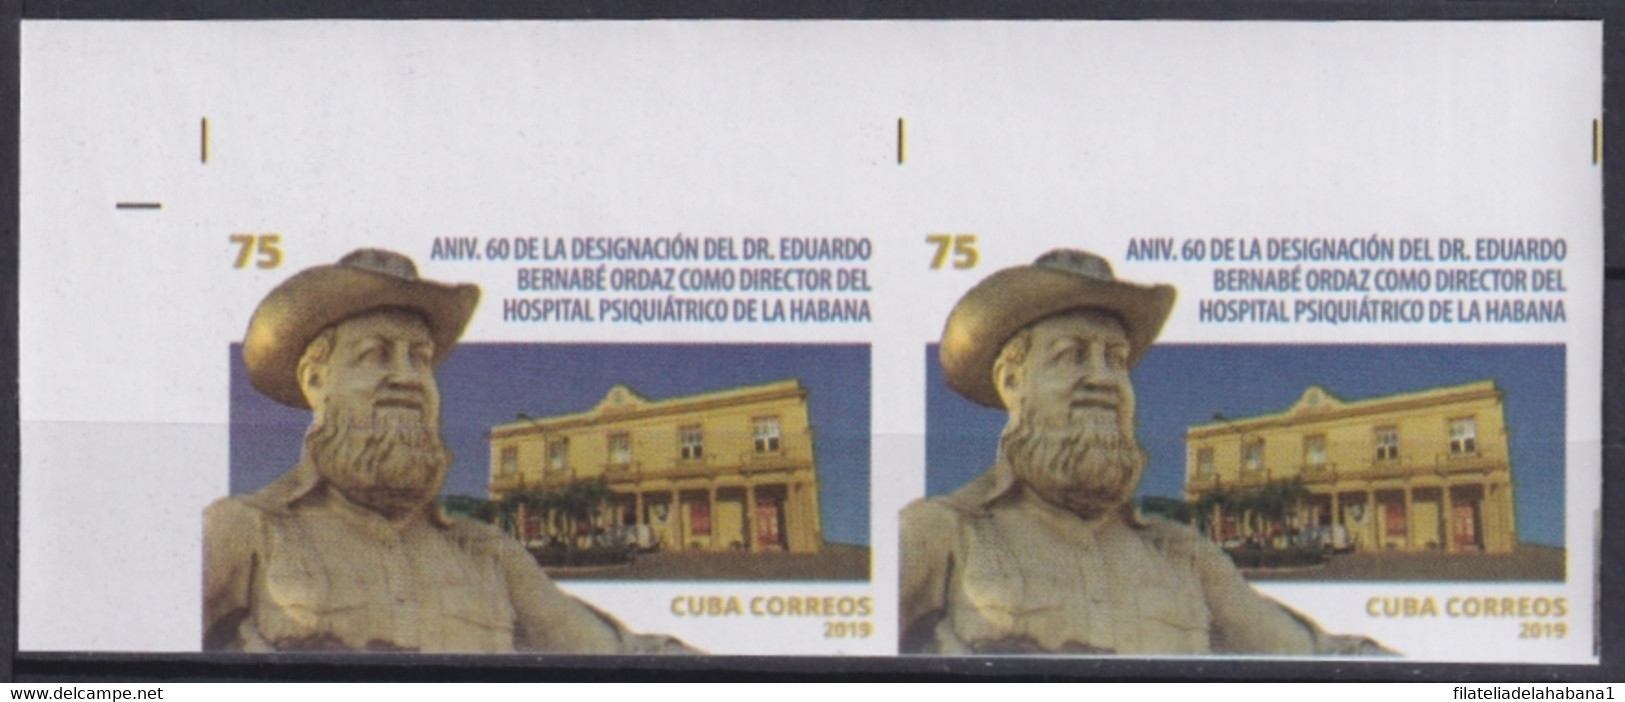 2019.217 CUBA MNH 2019 IMPERFORATED PROOF 75c 60 ANIV EDUARDO BERBABE ORDAZ. - Imperforates, Proofs & Errors